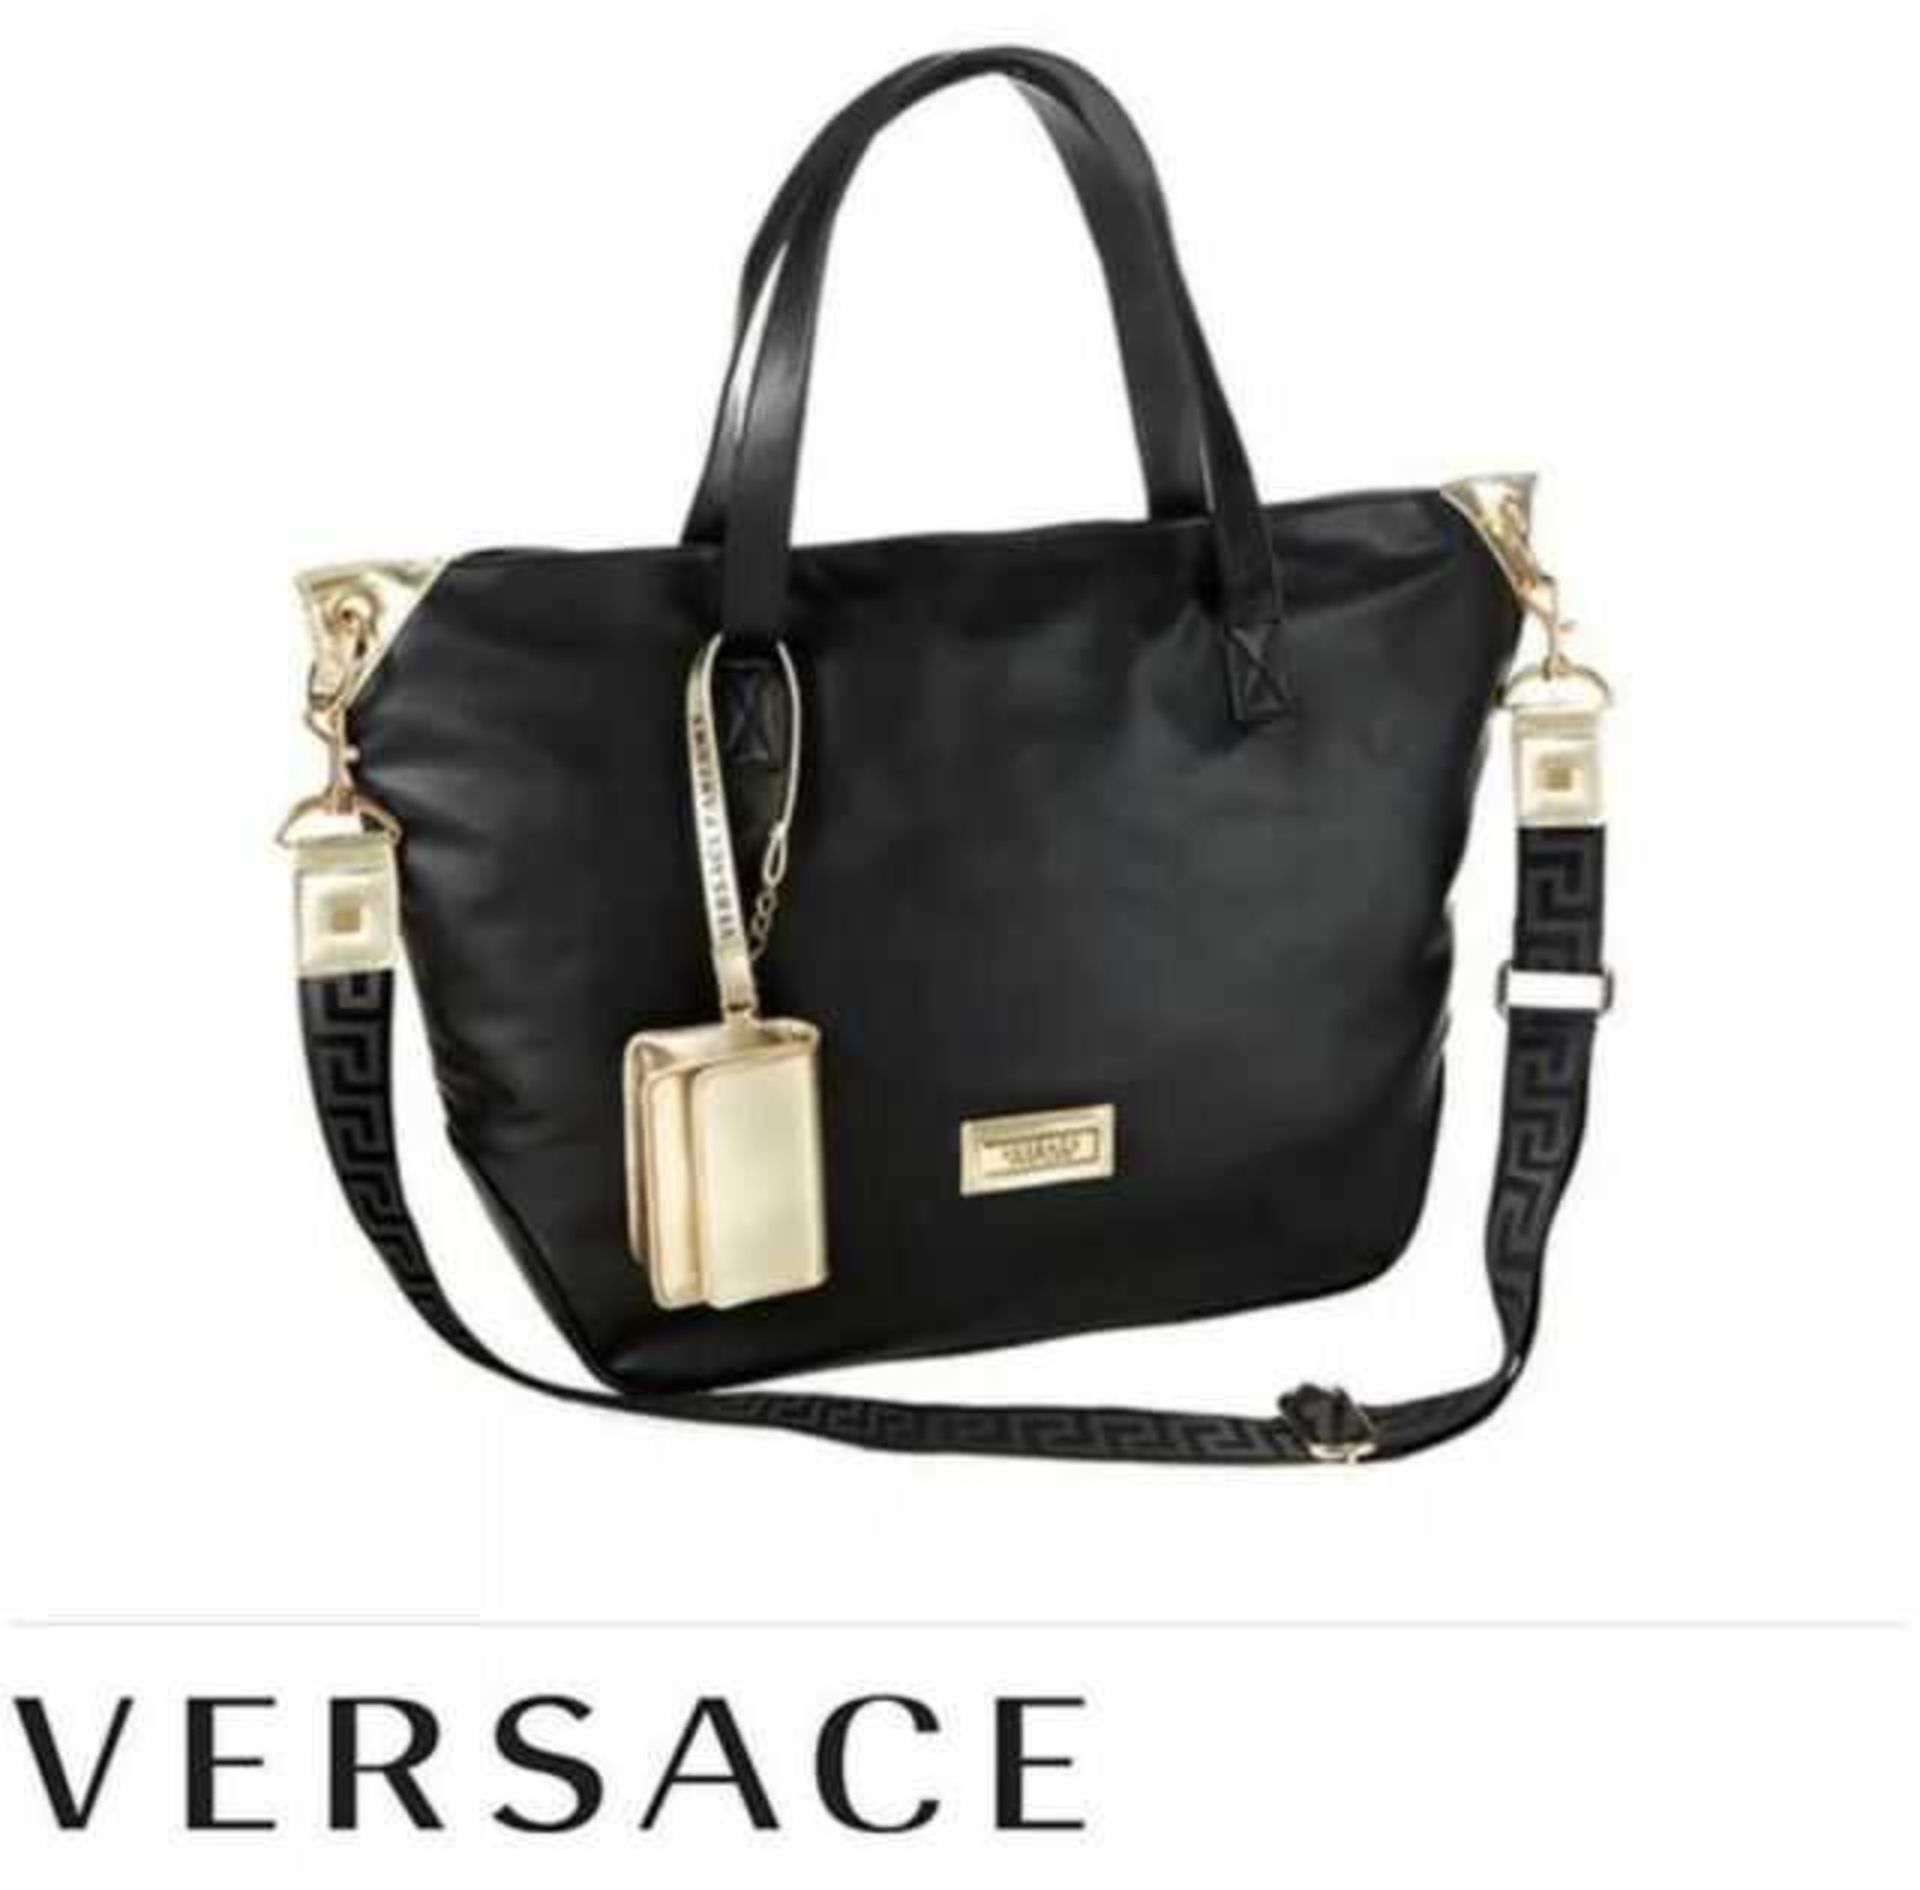 RRP £200 Bagged Brand New Versace Parfums Ladies Leather Blackhandbag